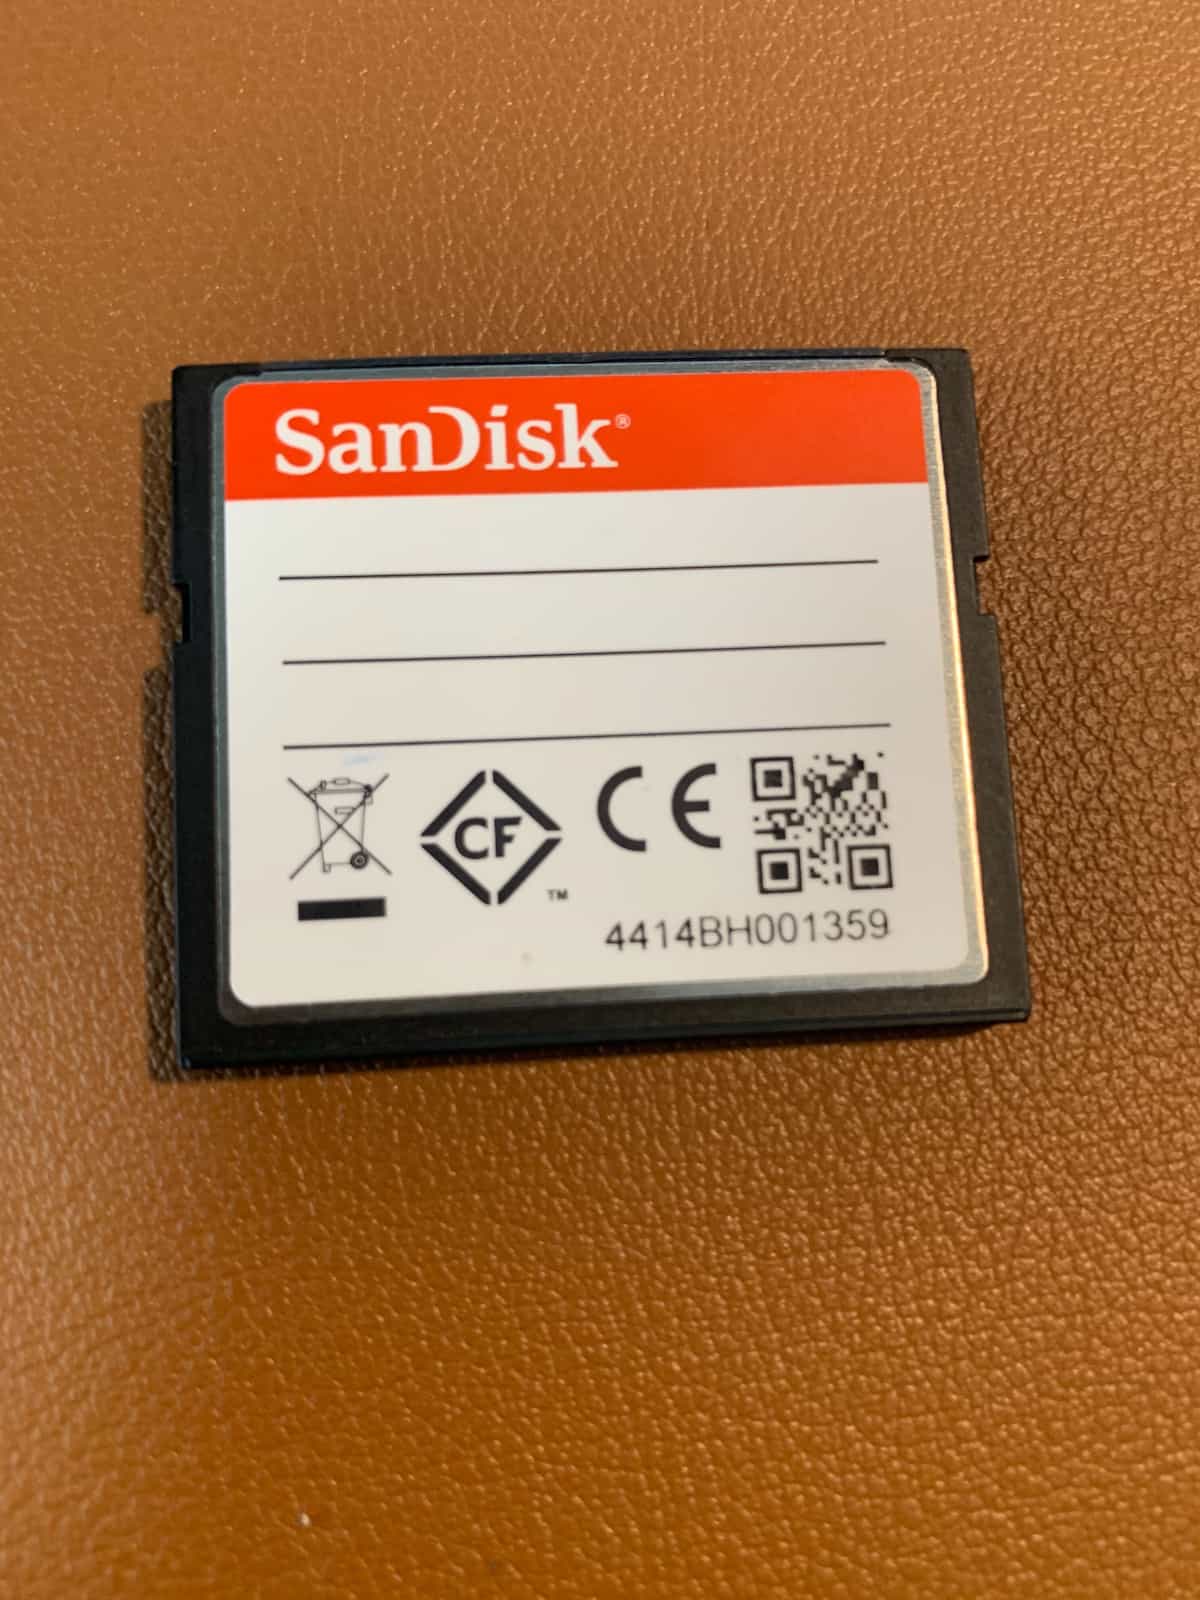 Back of SanDisk Compact flash card